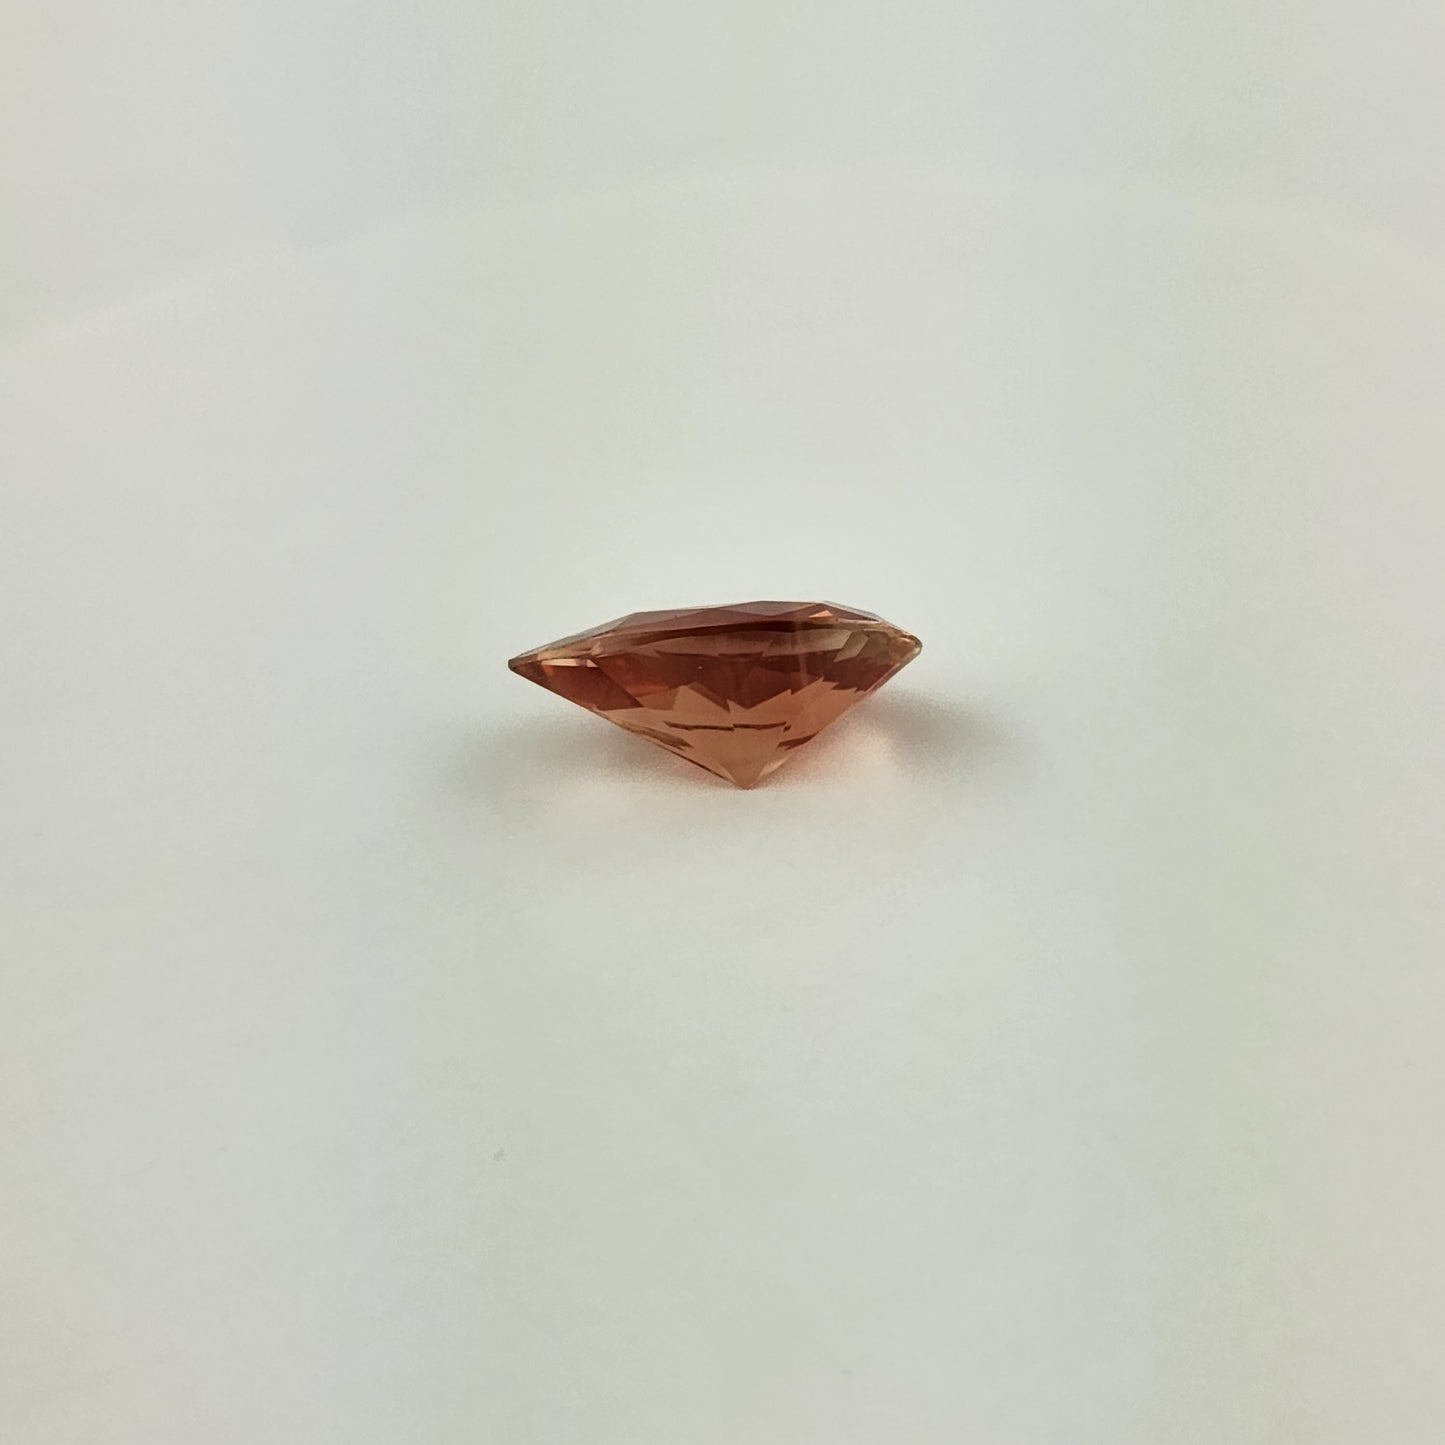 3.82 ct. Red Oregon Sunstone Pear Cut